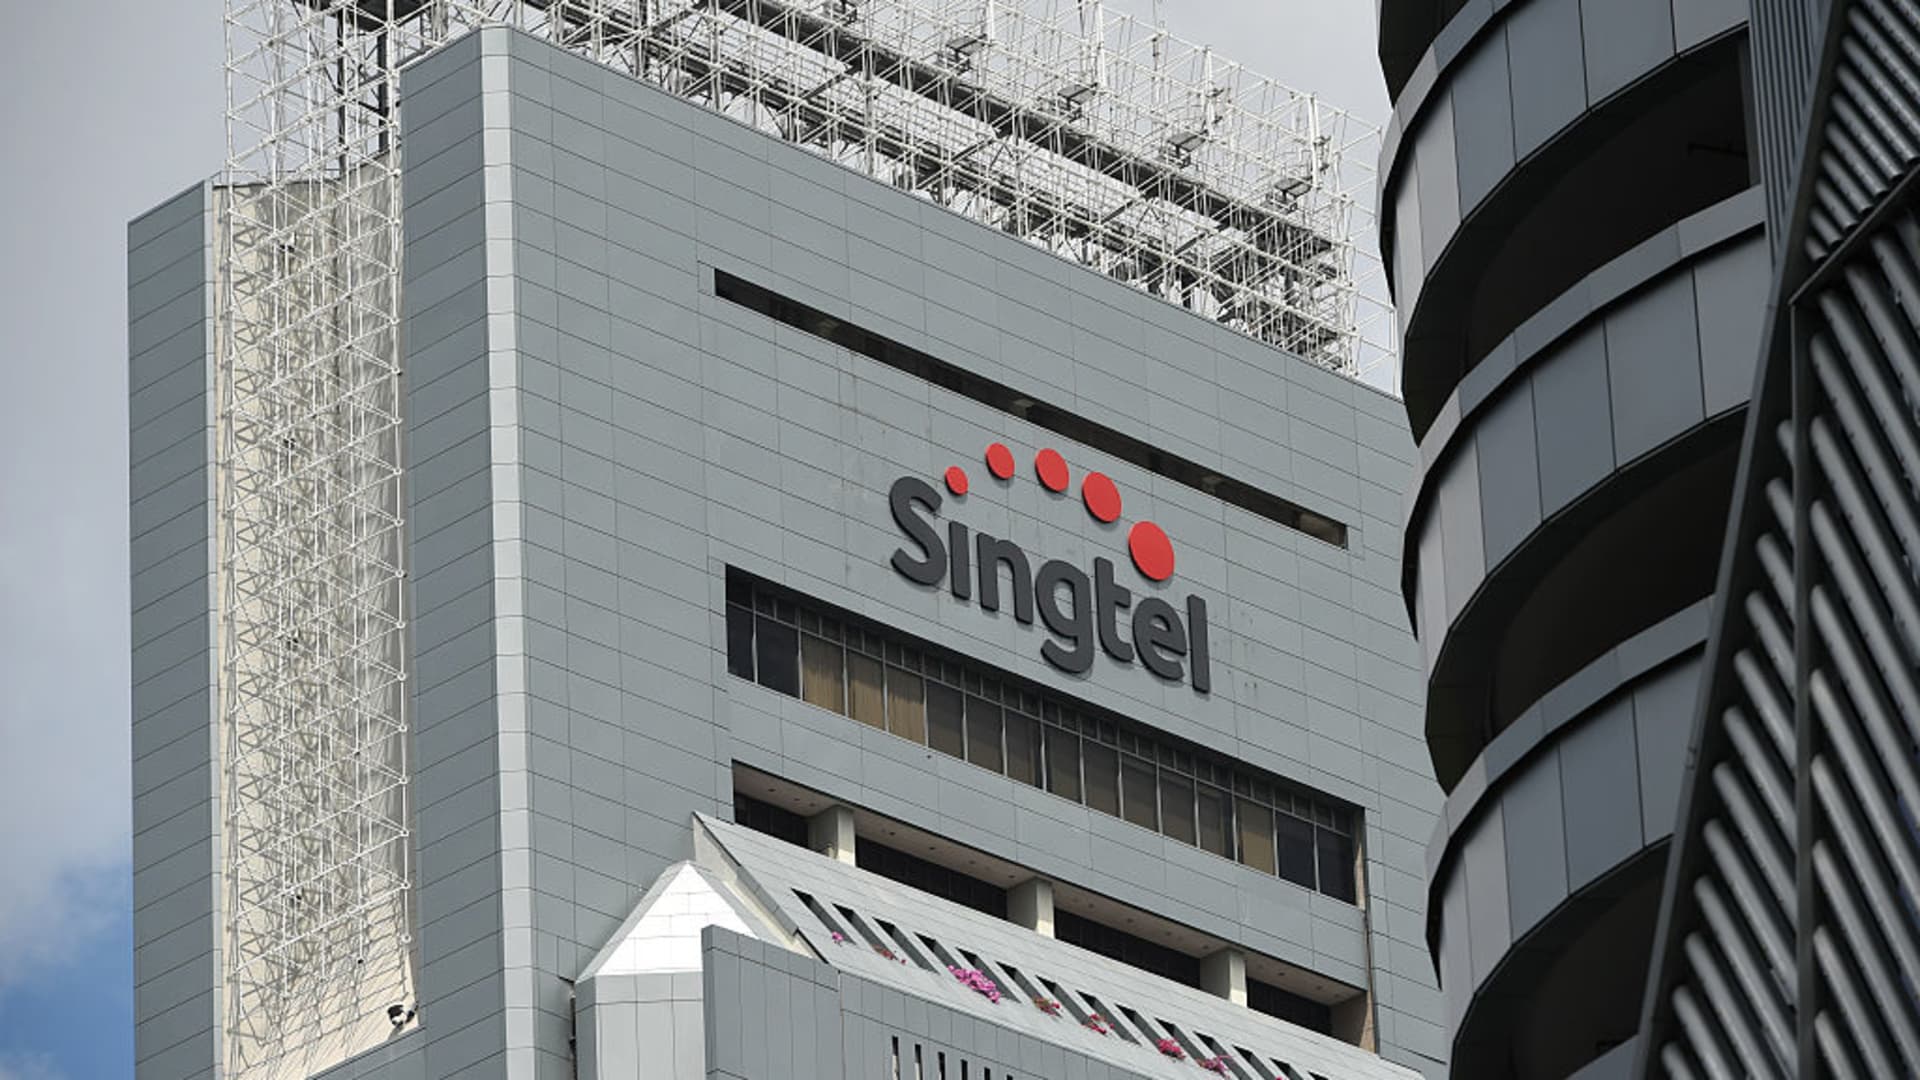 Telecom limited. Singtel Singapore. Singapore Telecommunications Ltd. Здание Singtel. Singtel innov8 Сингапур.